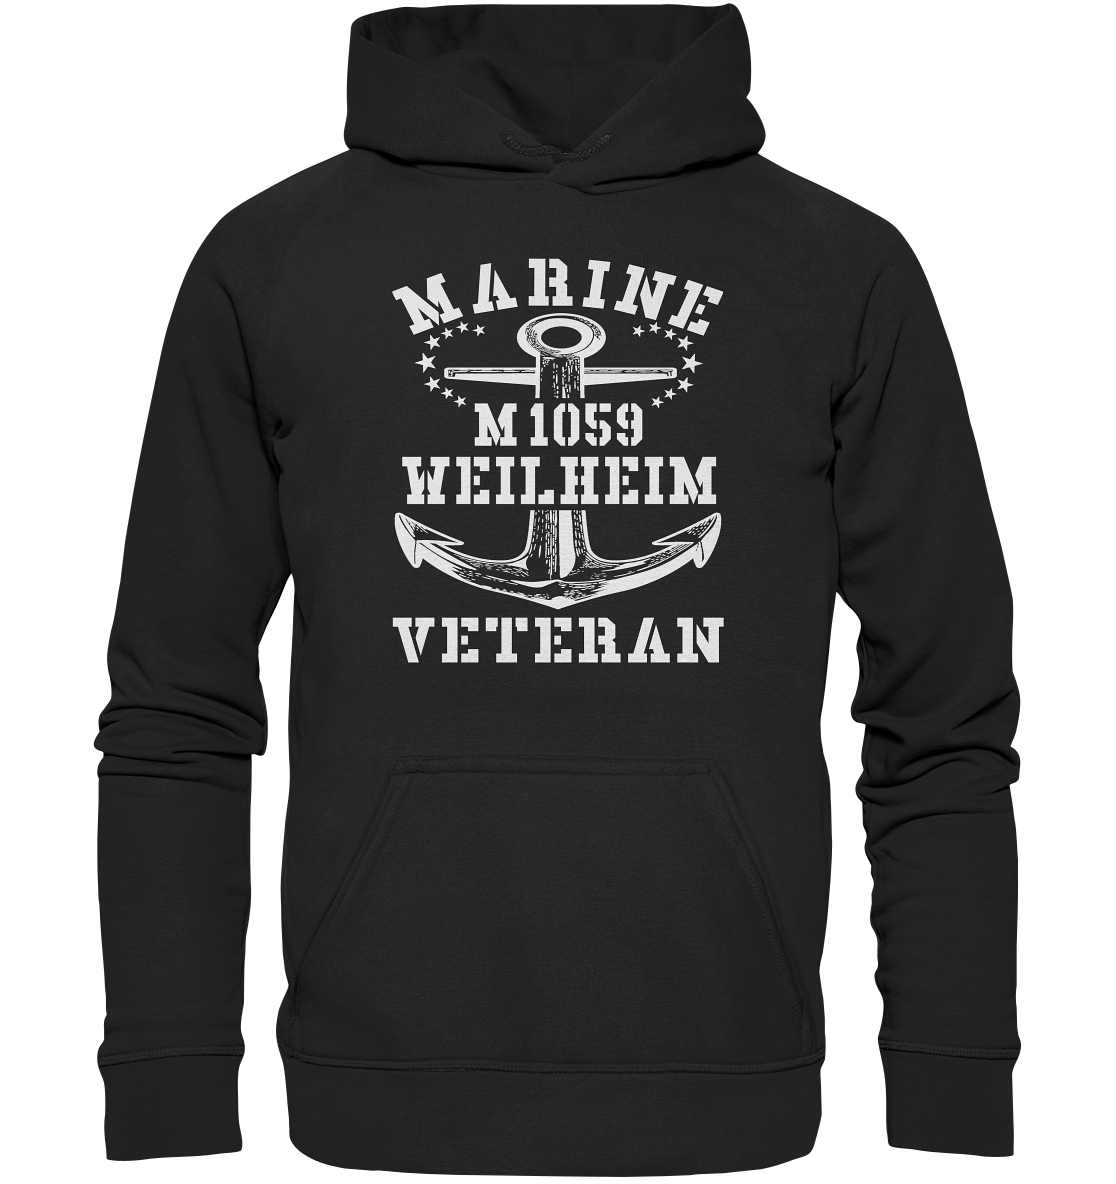 Mij.-Boot M1059 WEILHEIM Marine Veteran - Basic Unisex Hoodie